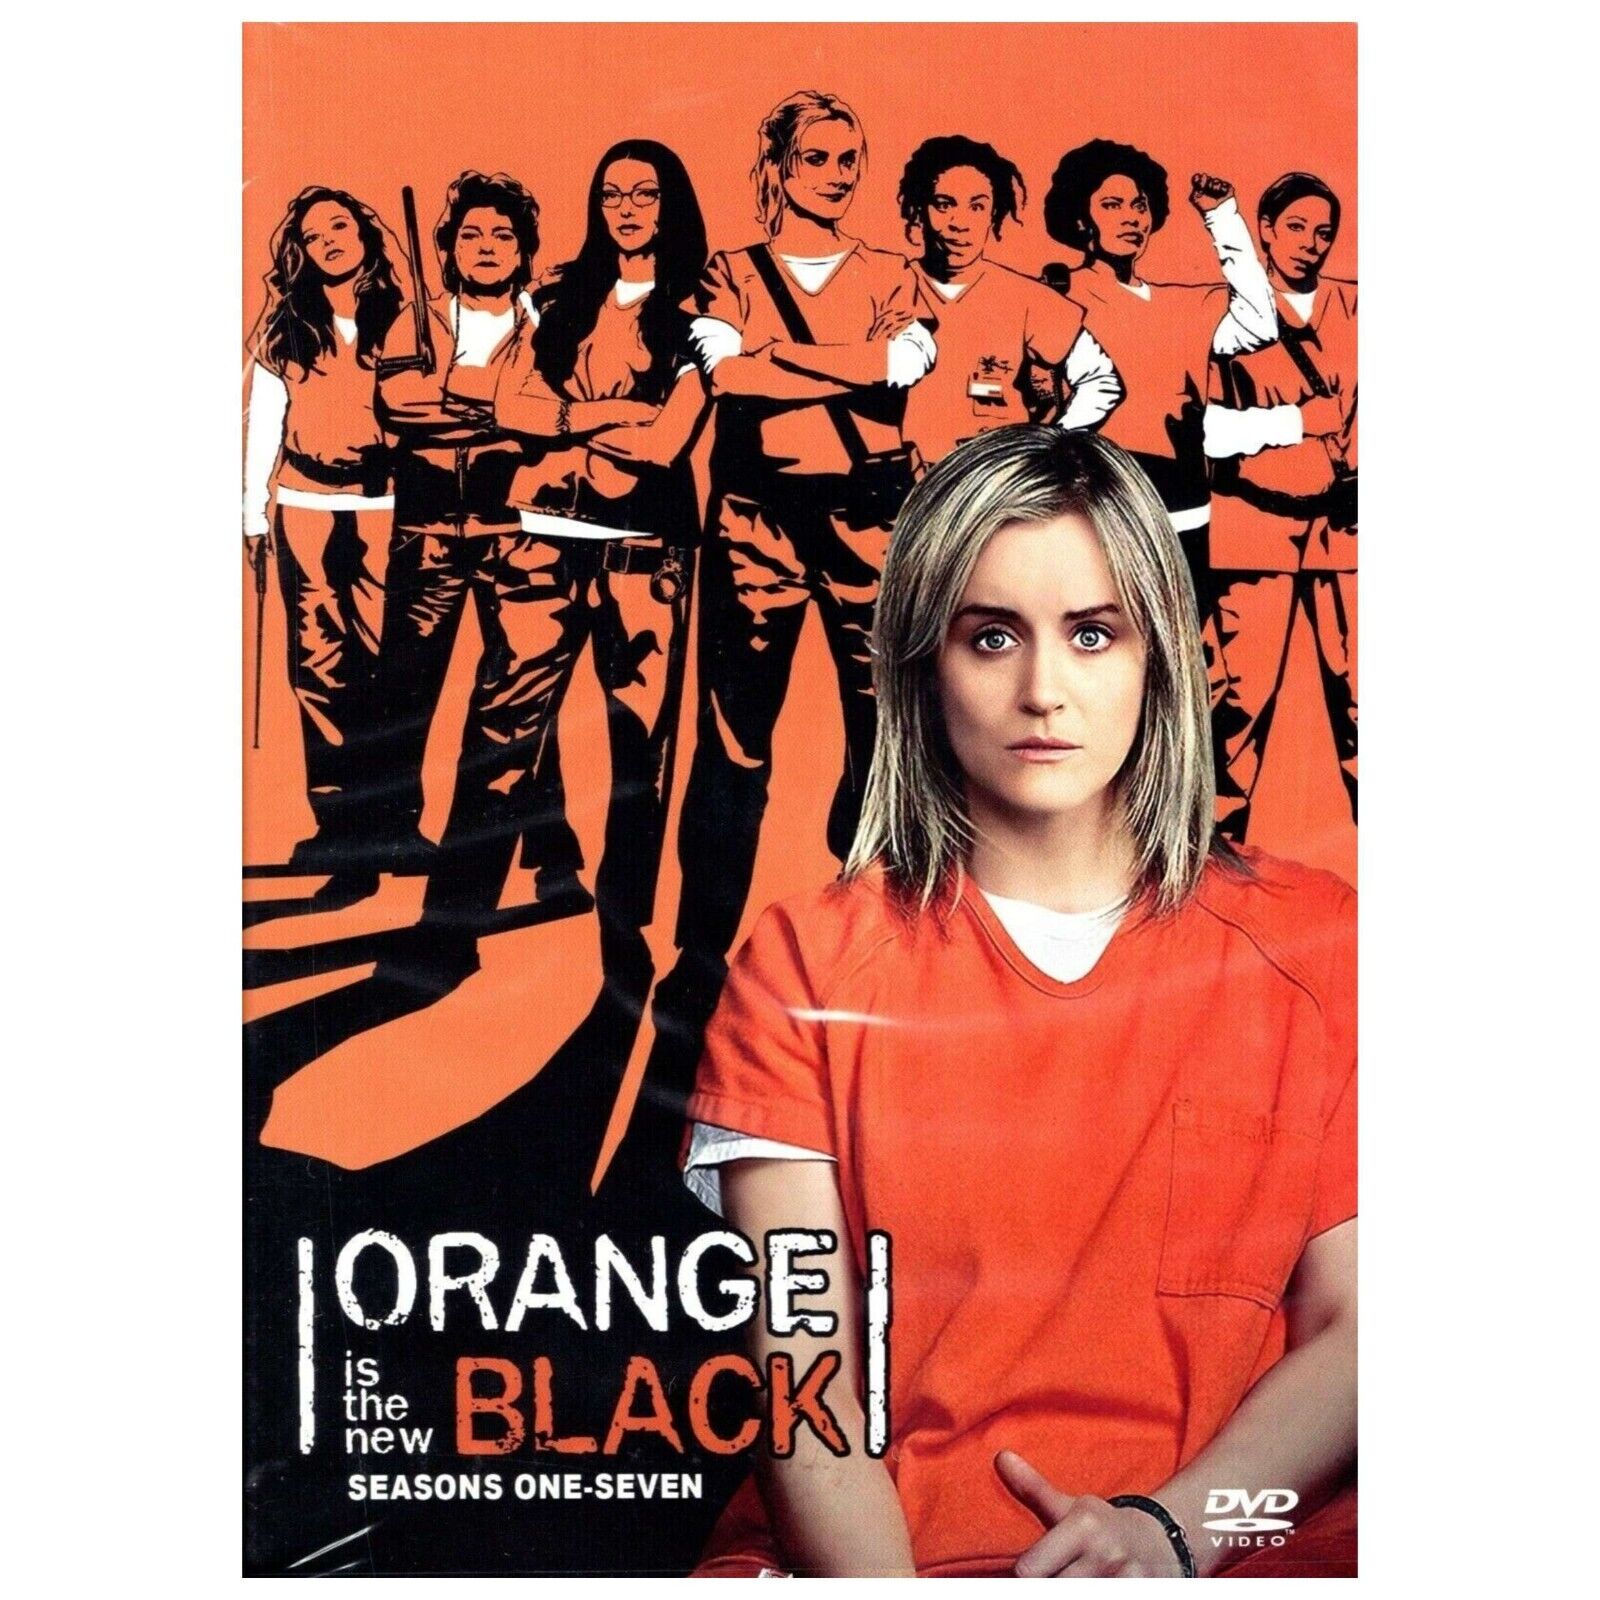 ORANGE IS THE NEW BLACK the Complete Series Seasons 1-7 on DVD - 1 2 3 4 5 6 7